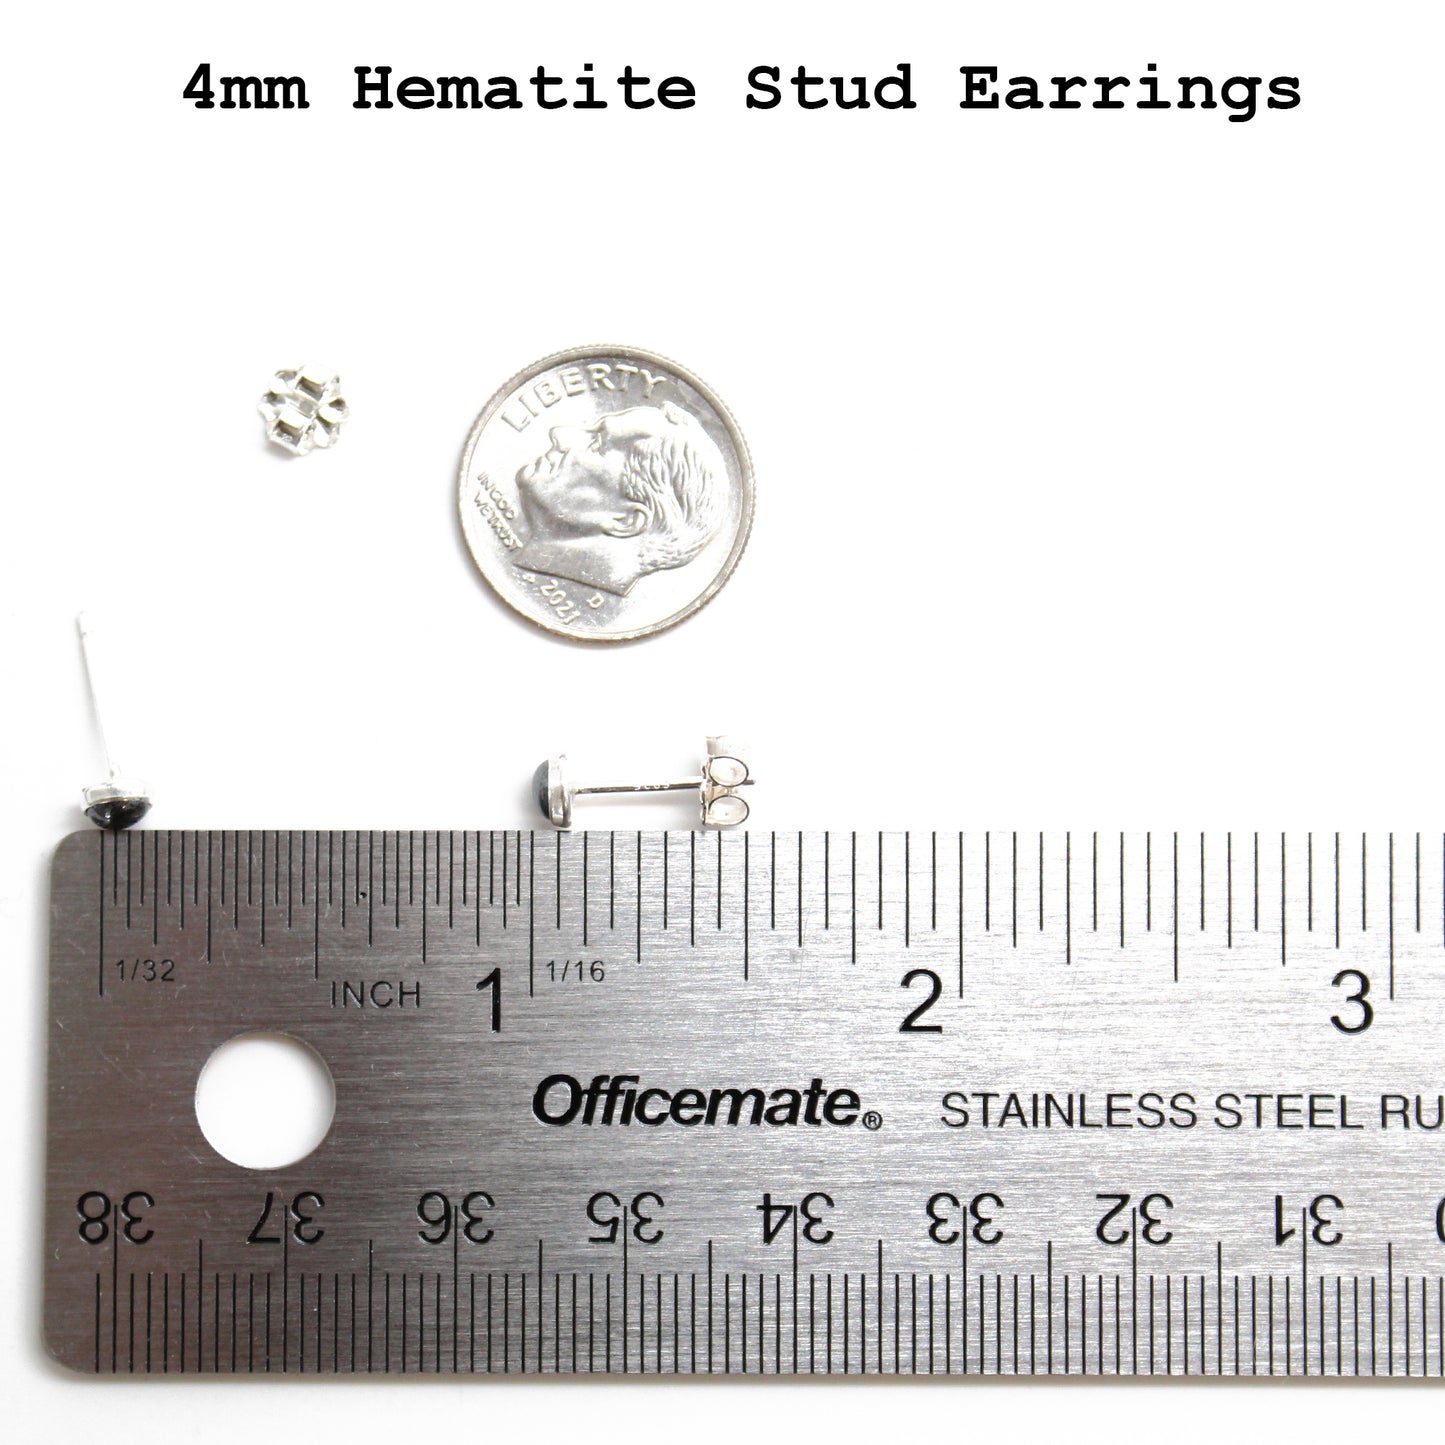 4mm Hematite Stud Earrings